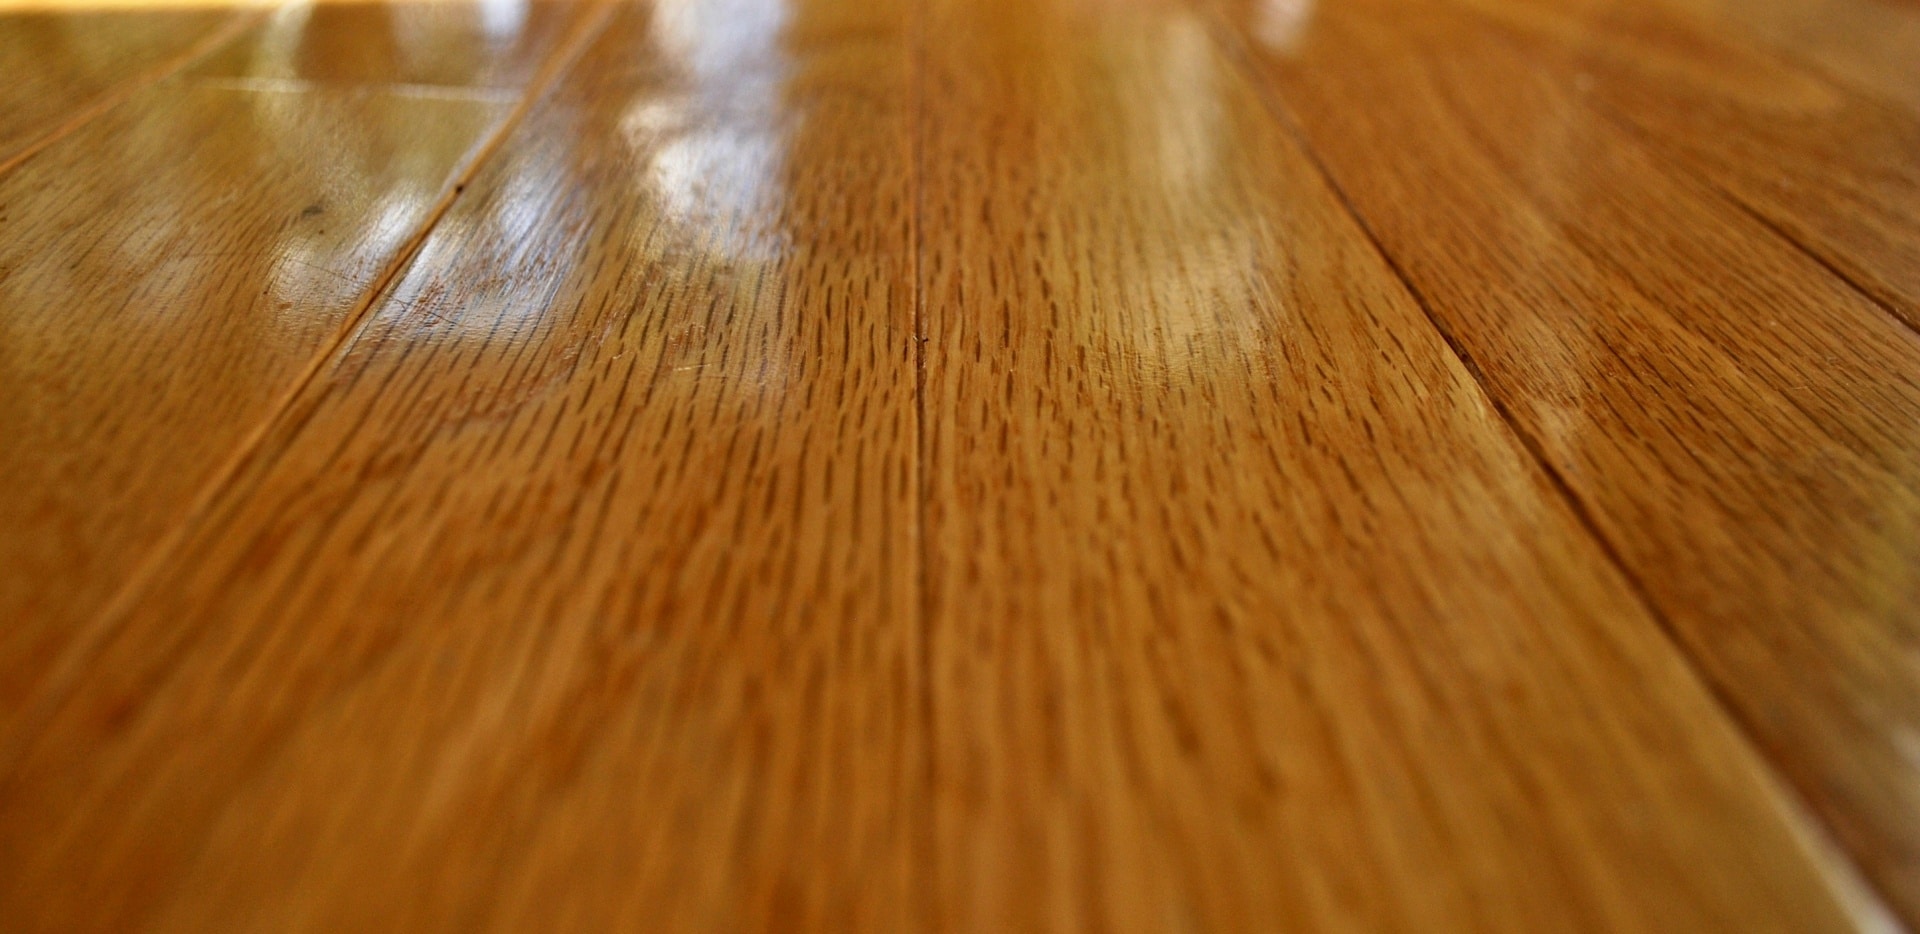 Top 5 Hardwood Flooring Companies In Canada Hardwood Design Centre